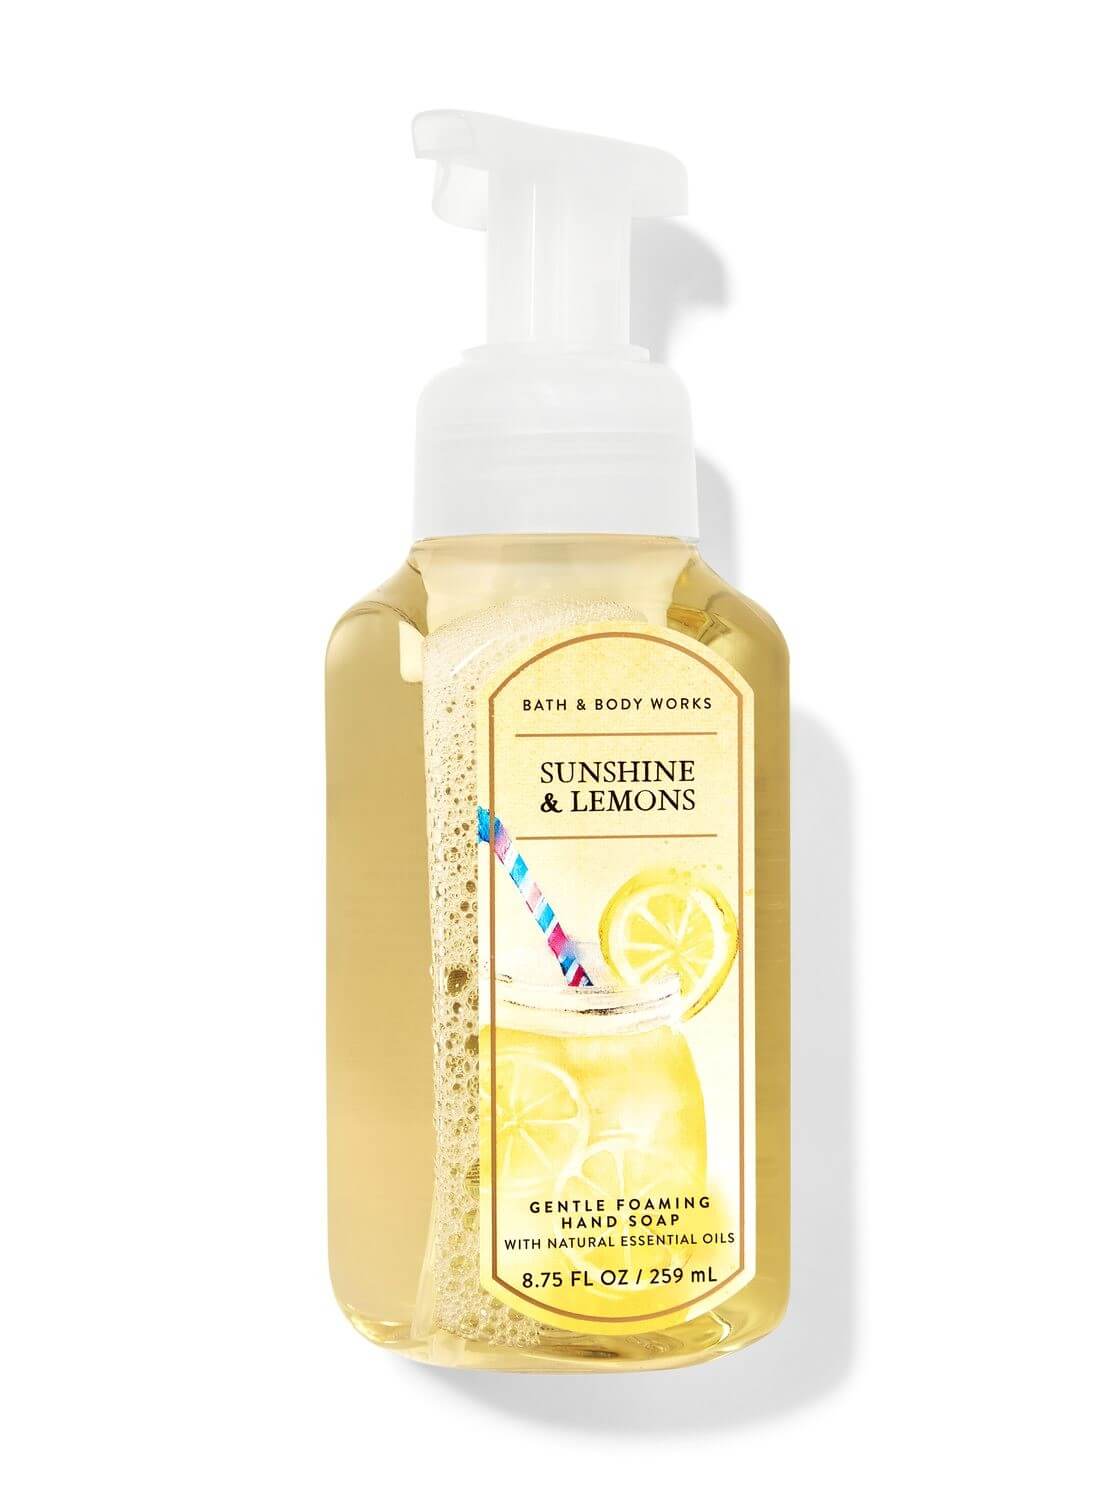 Bath & Body Works Sunshine & Lemons Gentle Foaming Hand Soap 259ml